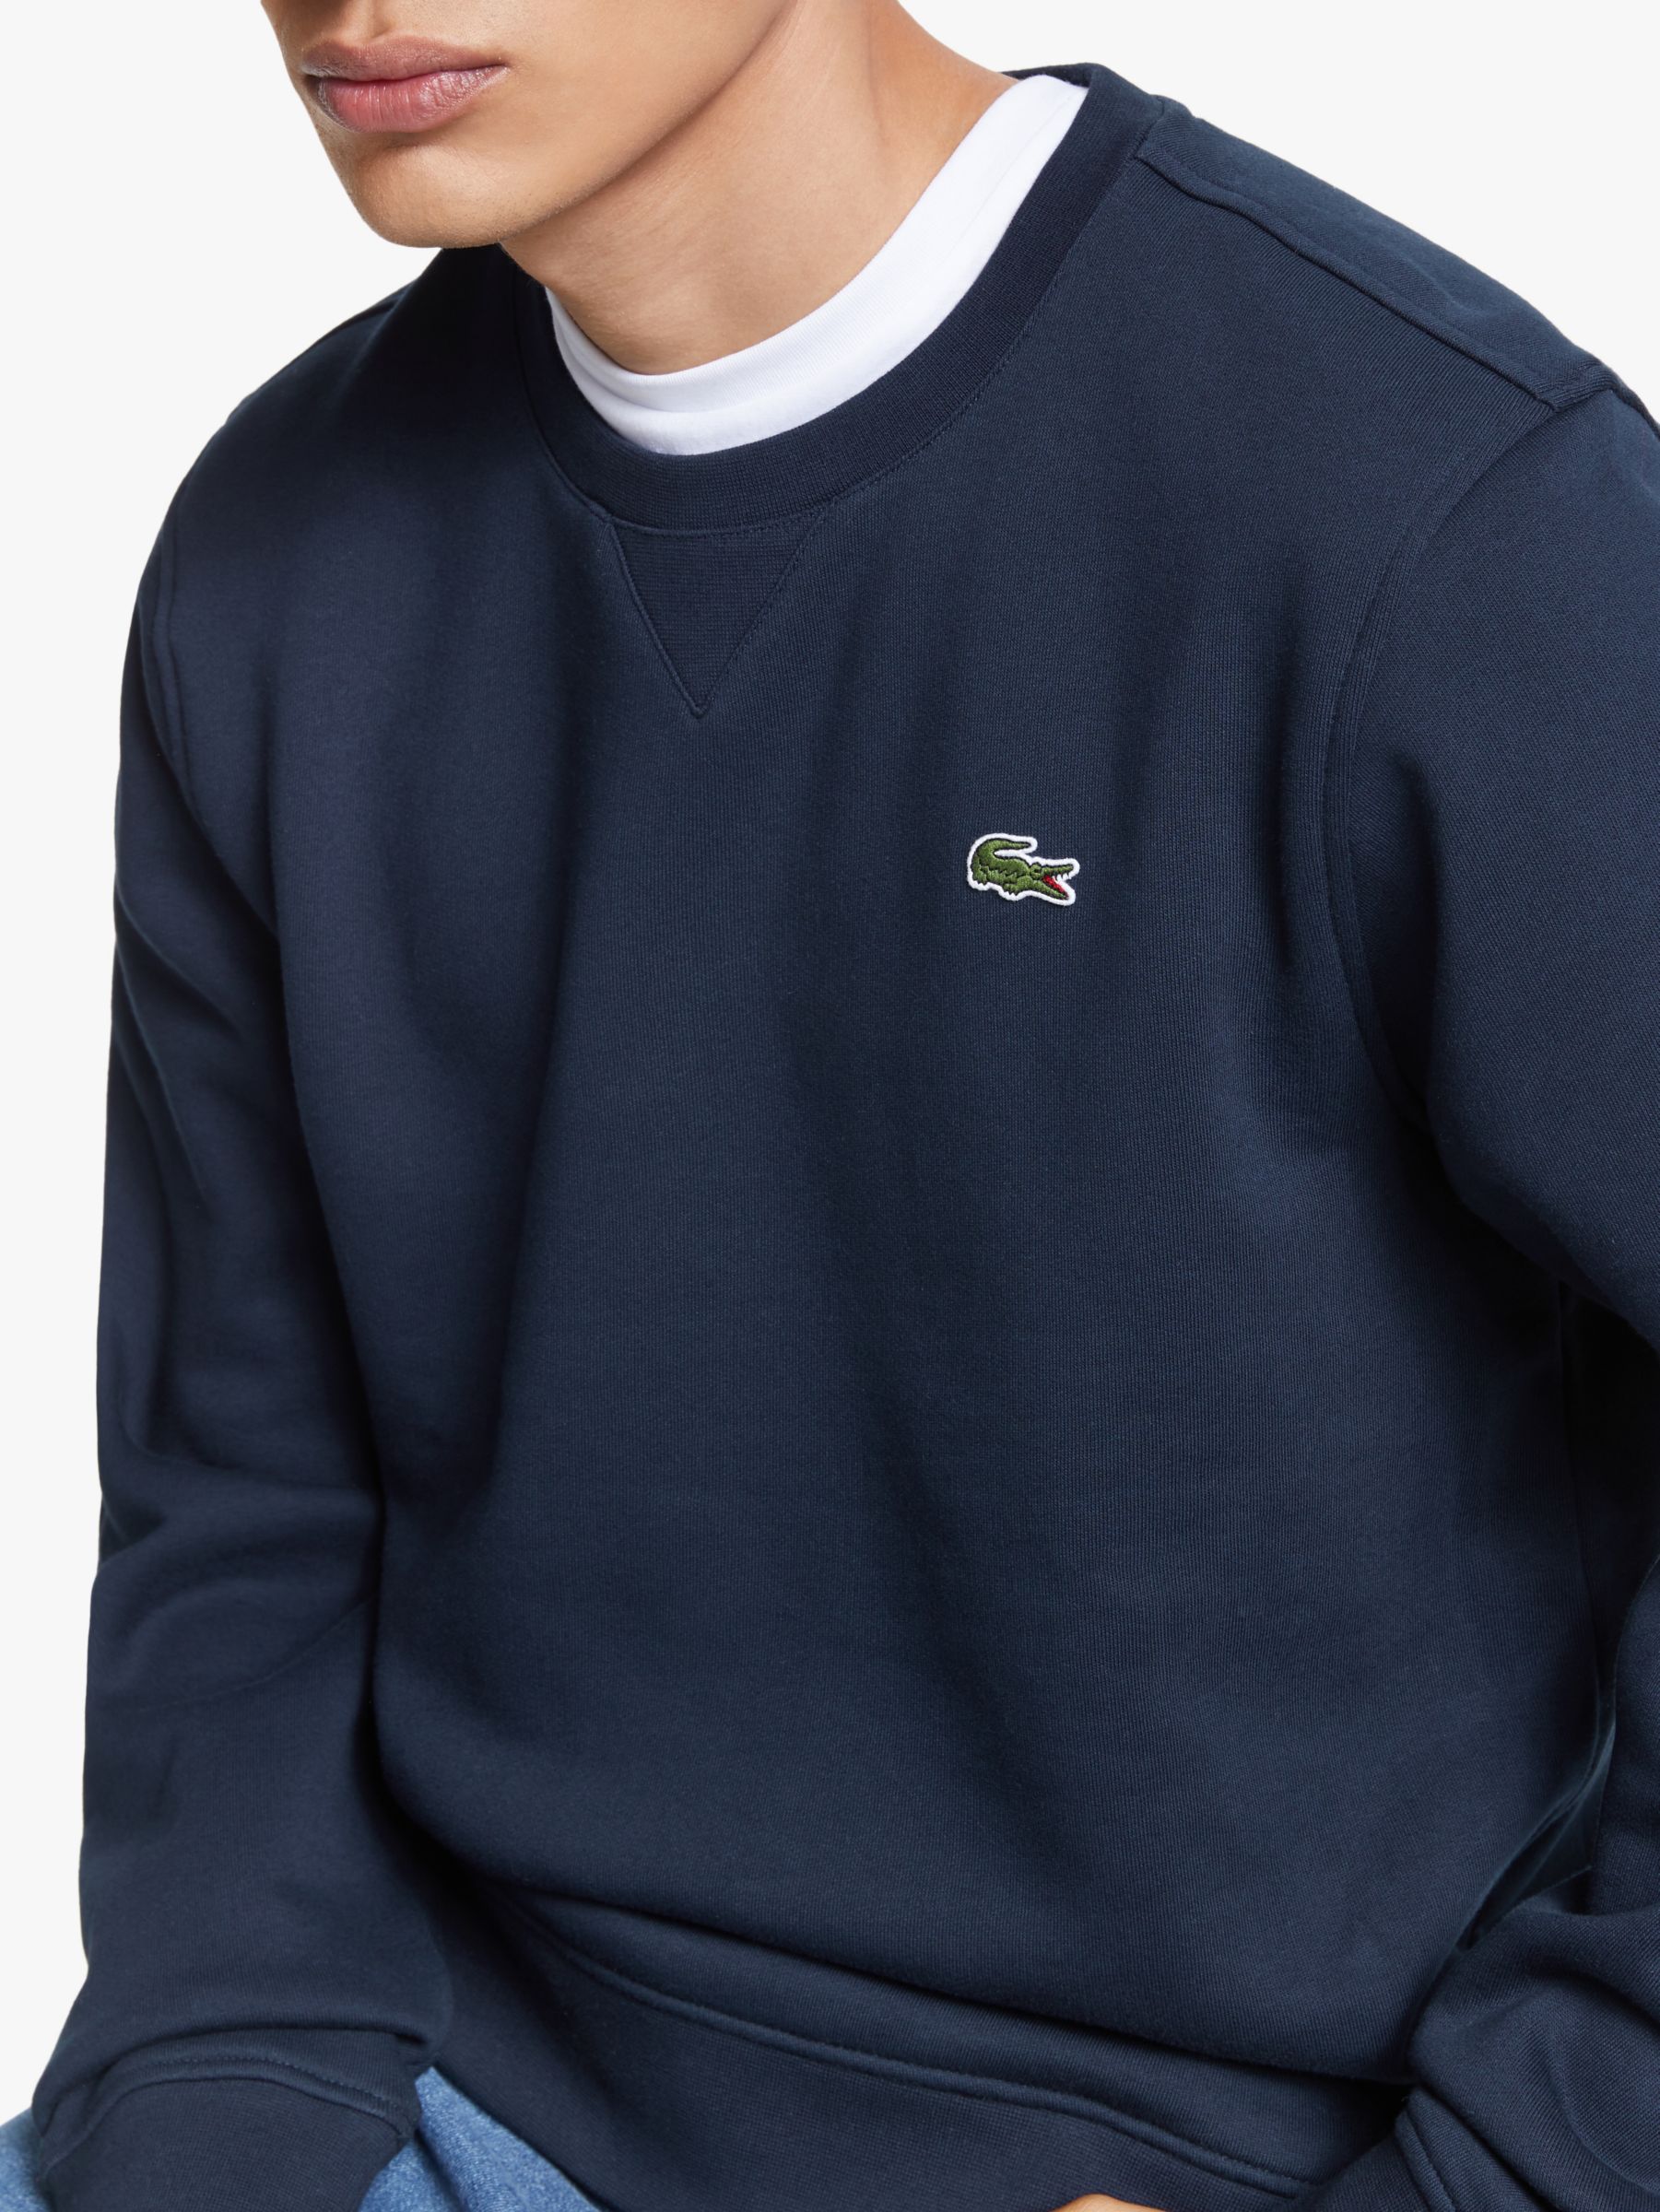 lacoste sweatshirt navy blue